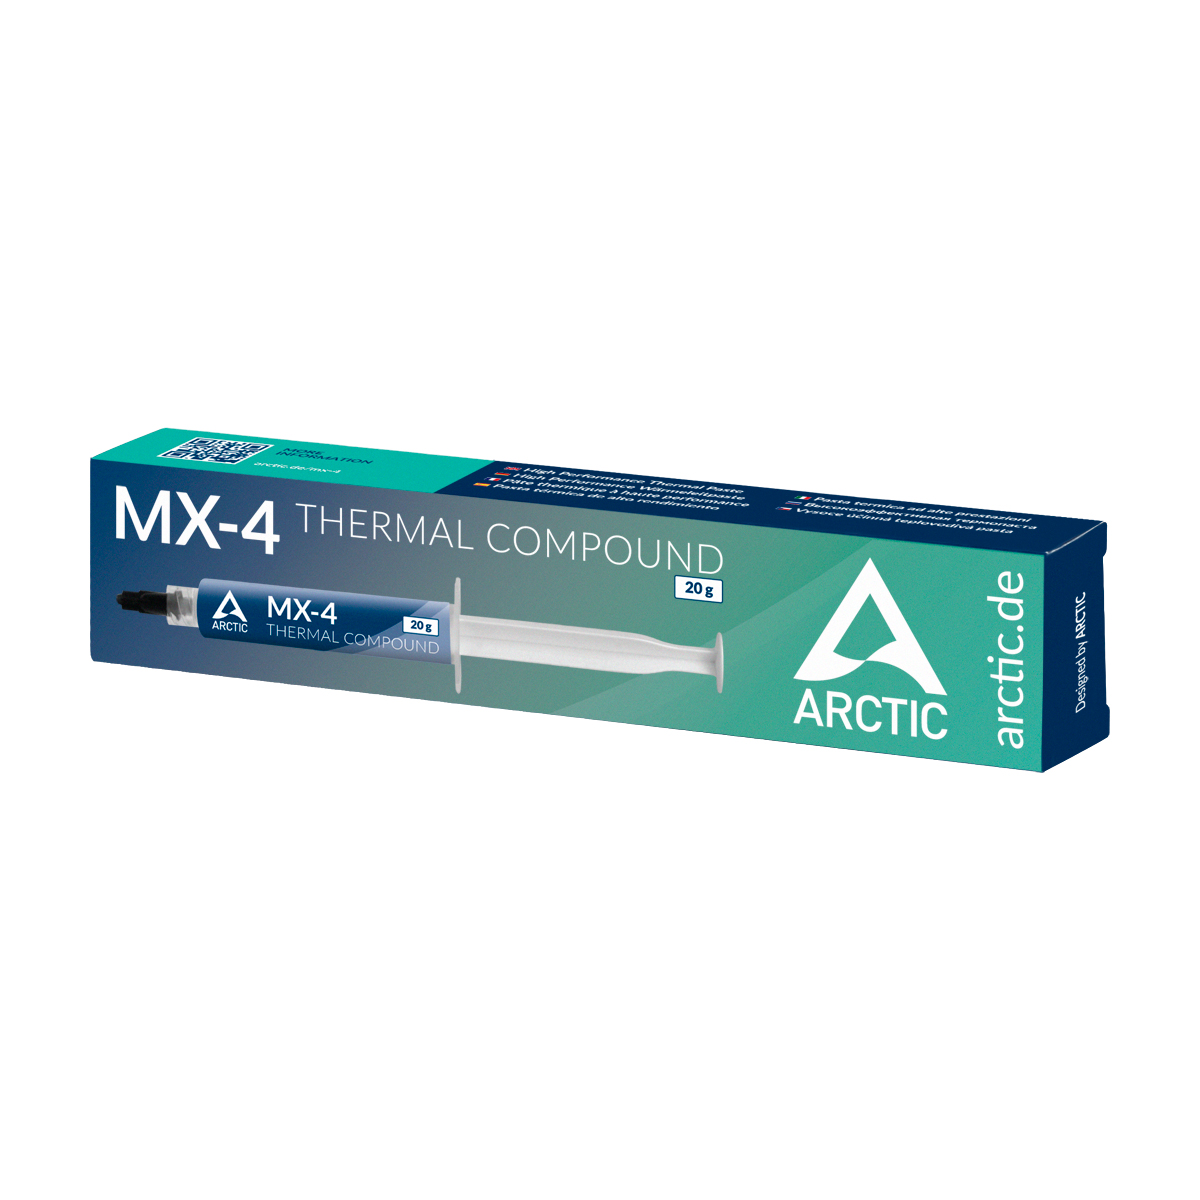 ARCTIC MX-4 - 20 Grams